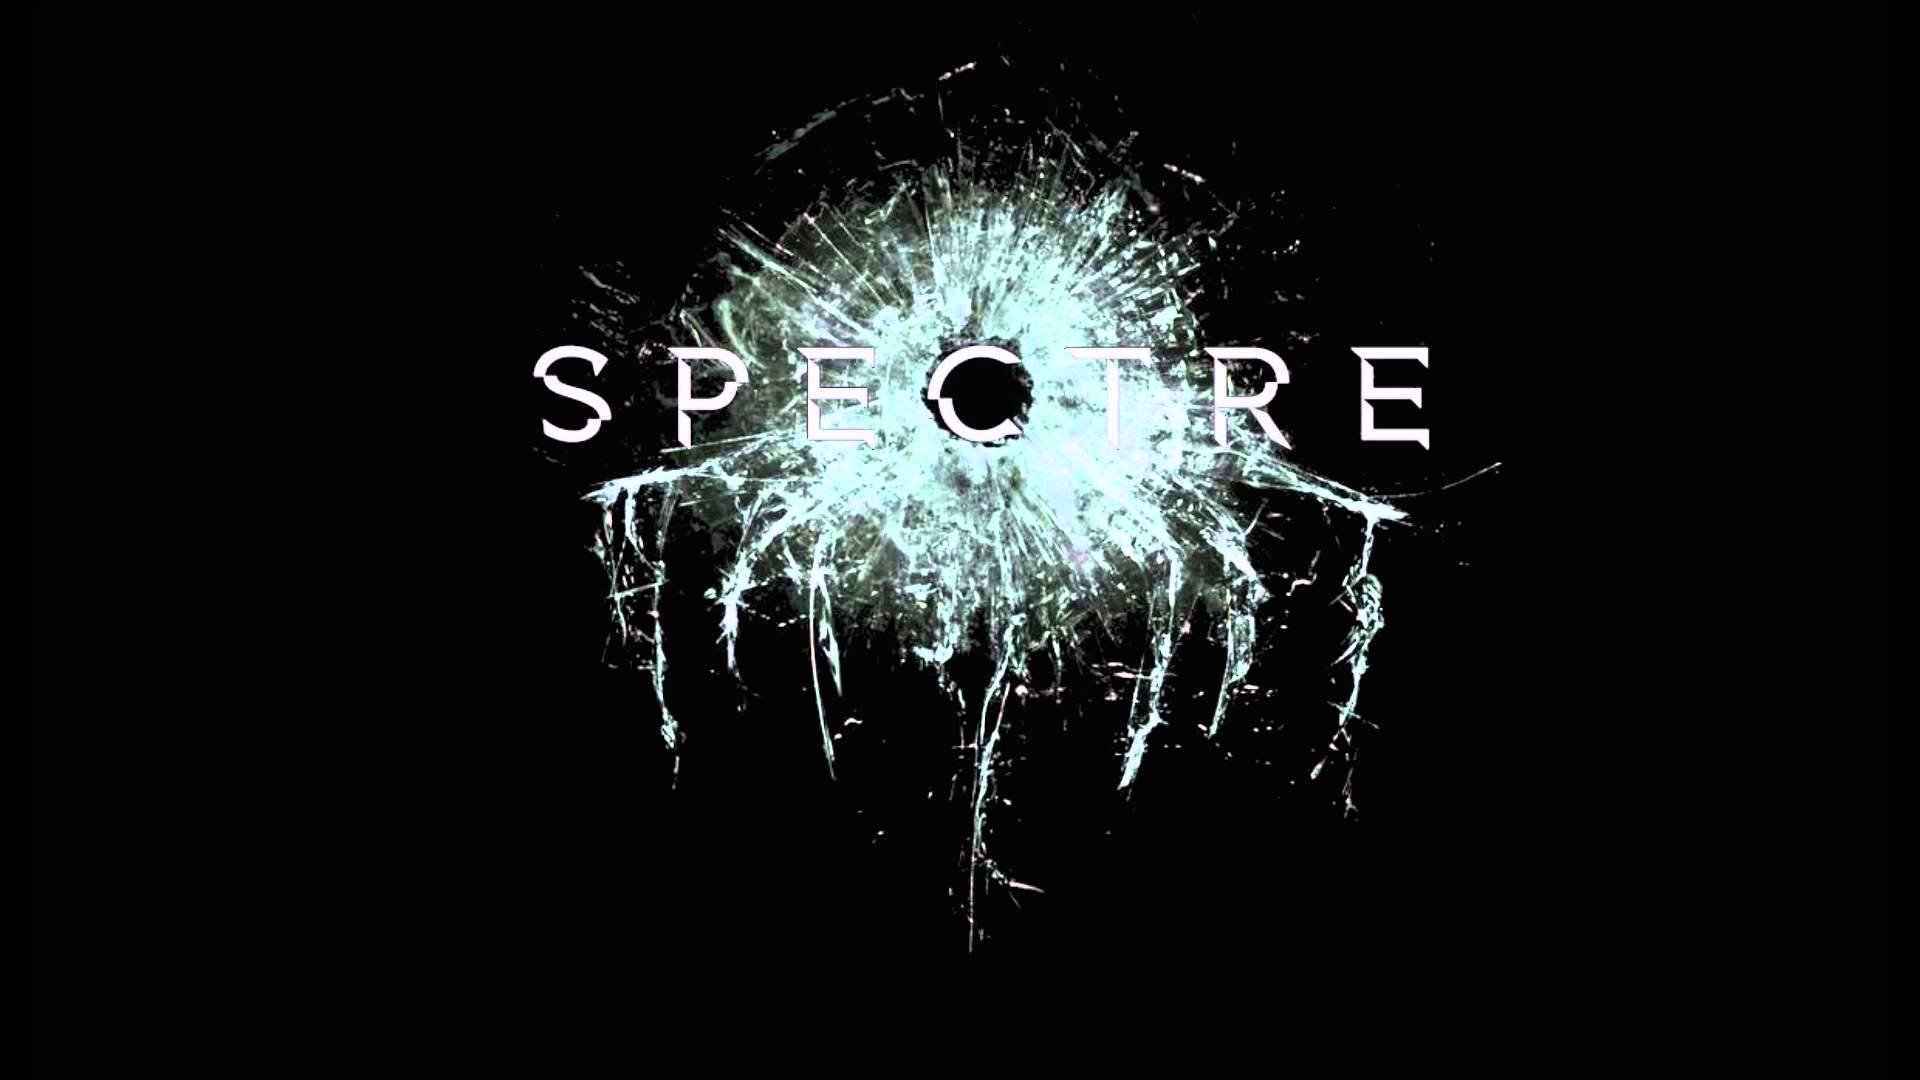 Spectre 007 Movie Logo Wallpaper HD Black BAckground